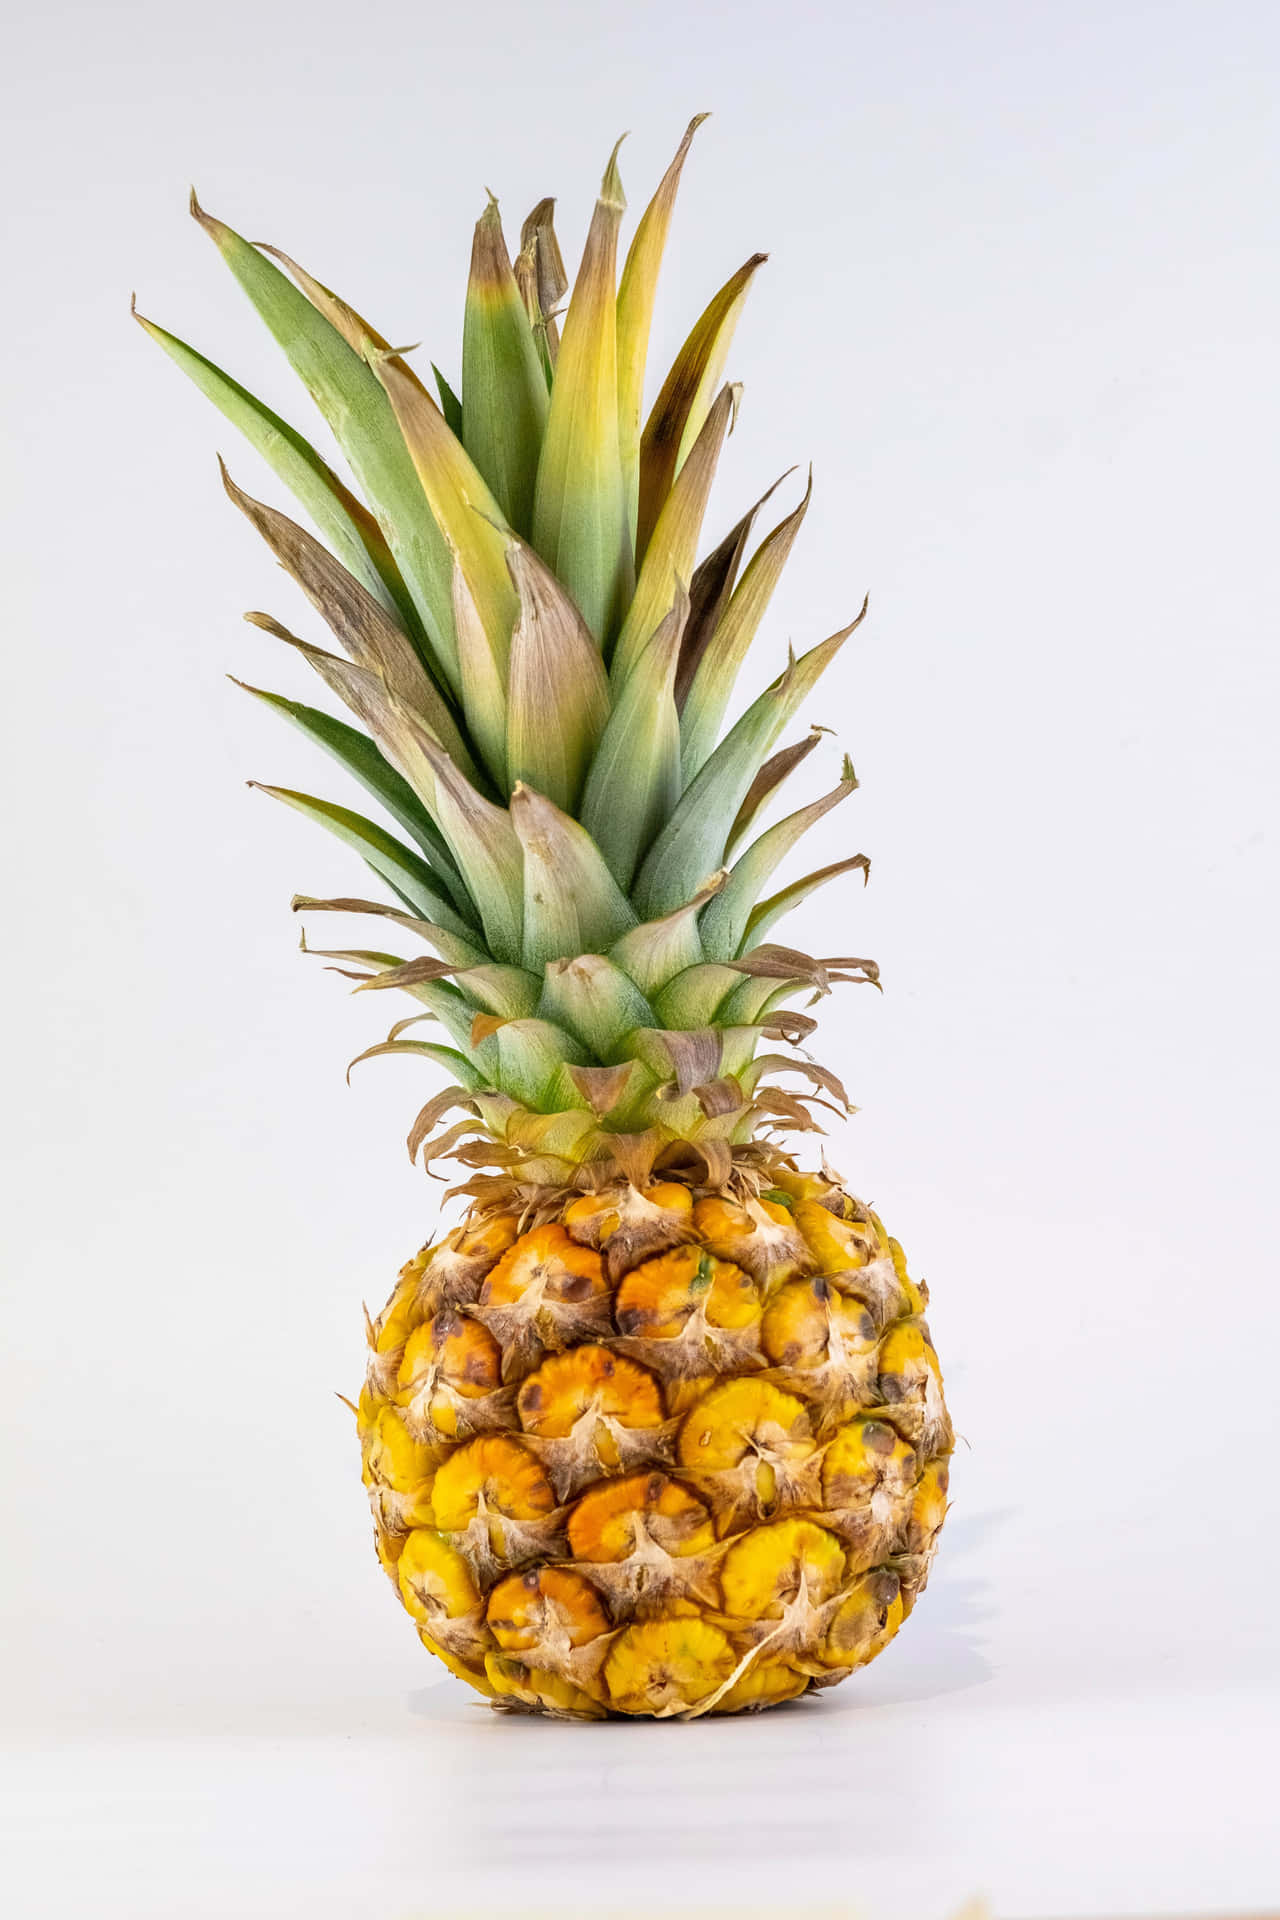 Bright, juicy Pineapples